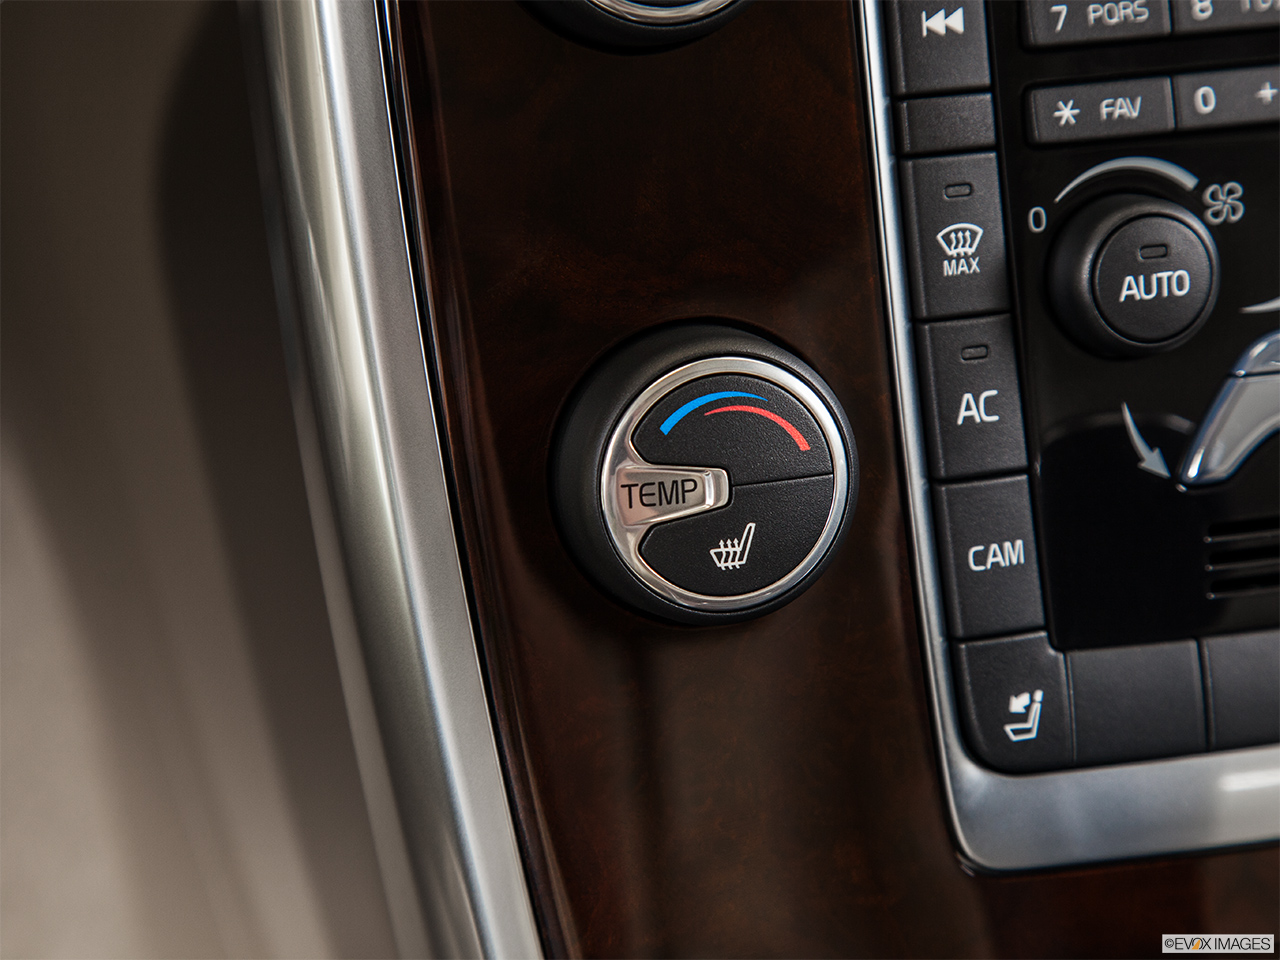 2015 Volvo XC70 Premier Plus Heated Seats Control 